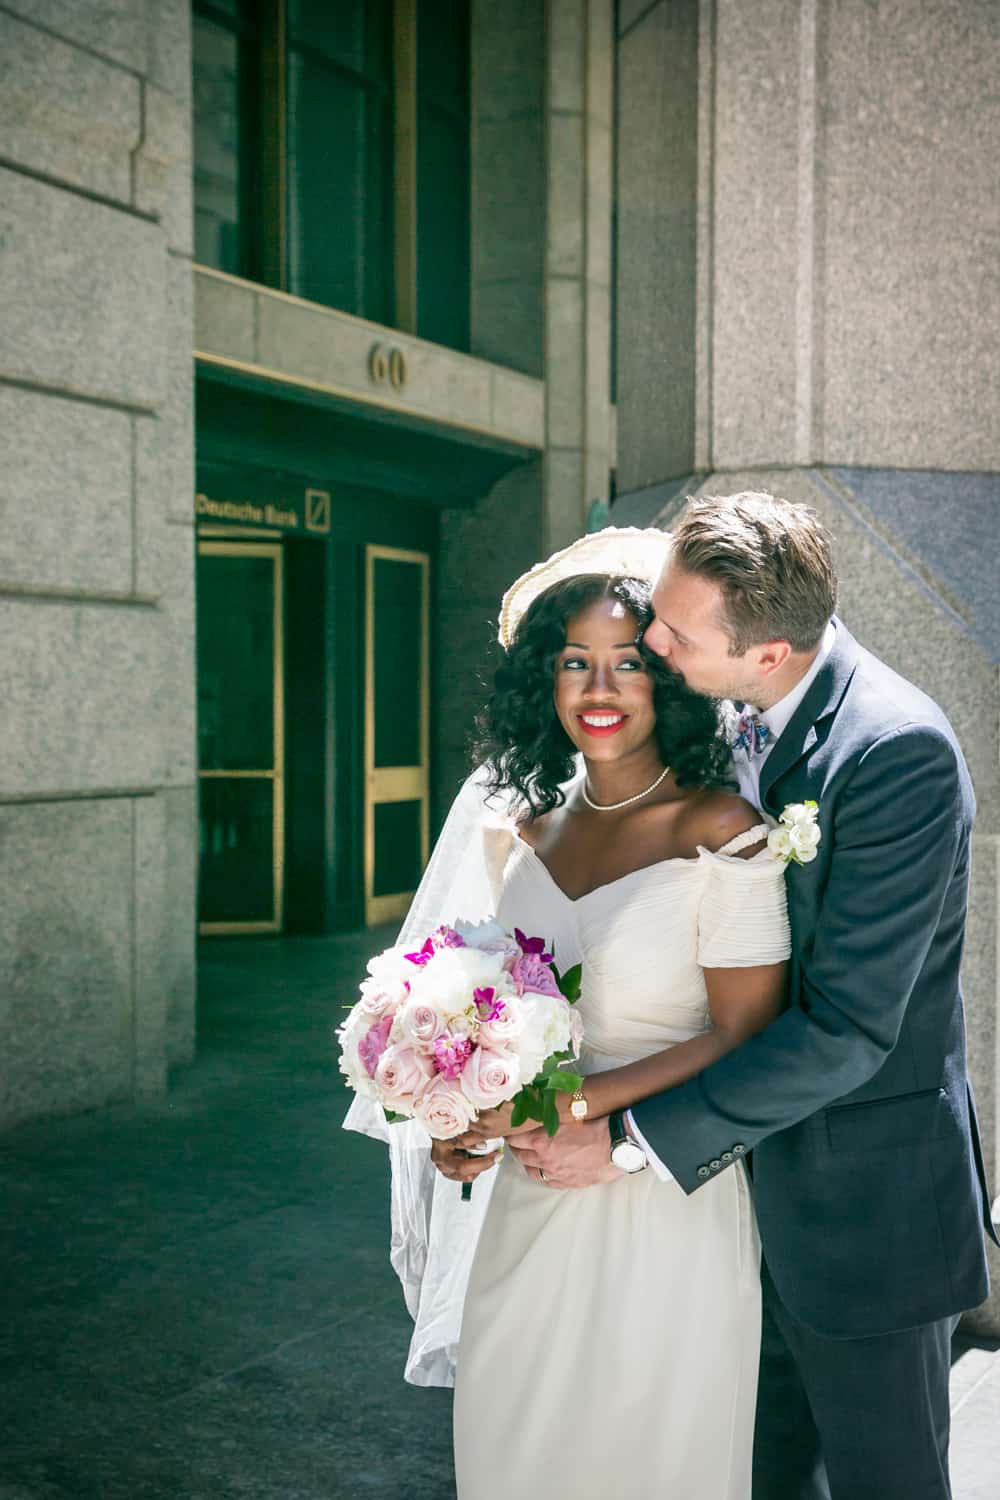 Groom kissing bride on side of head on Wall Street